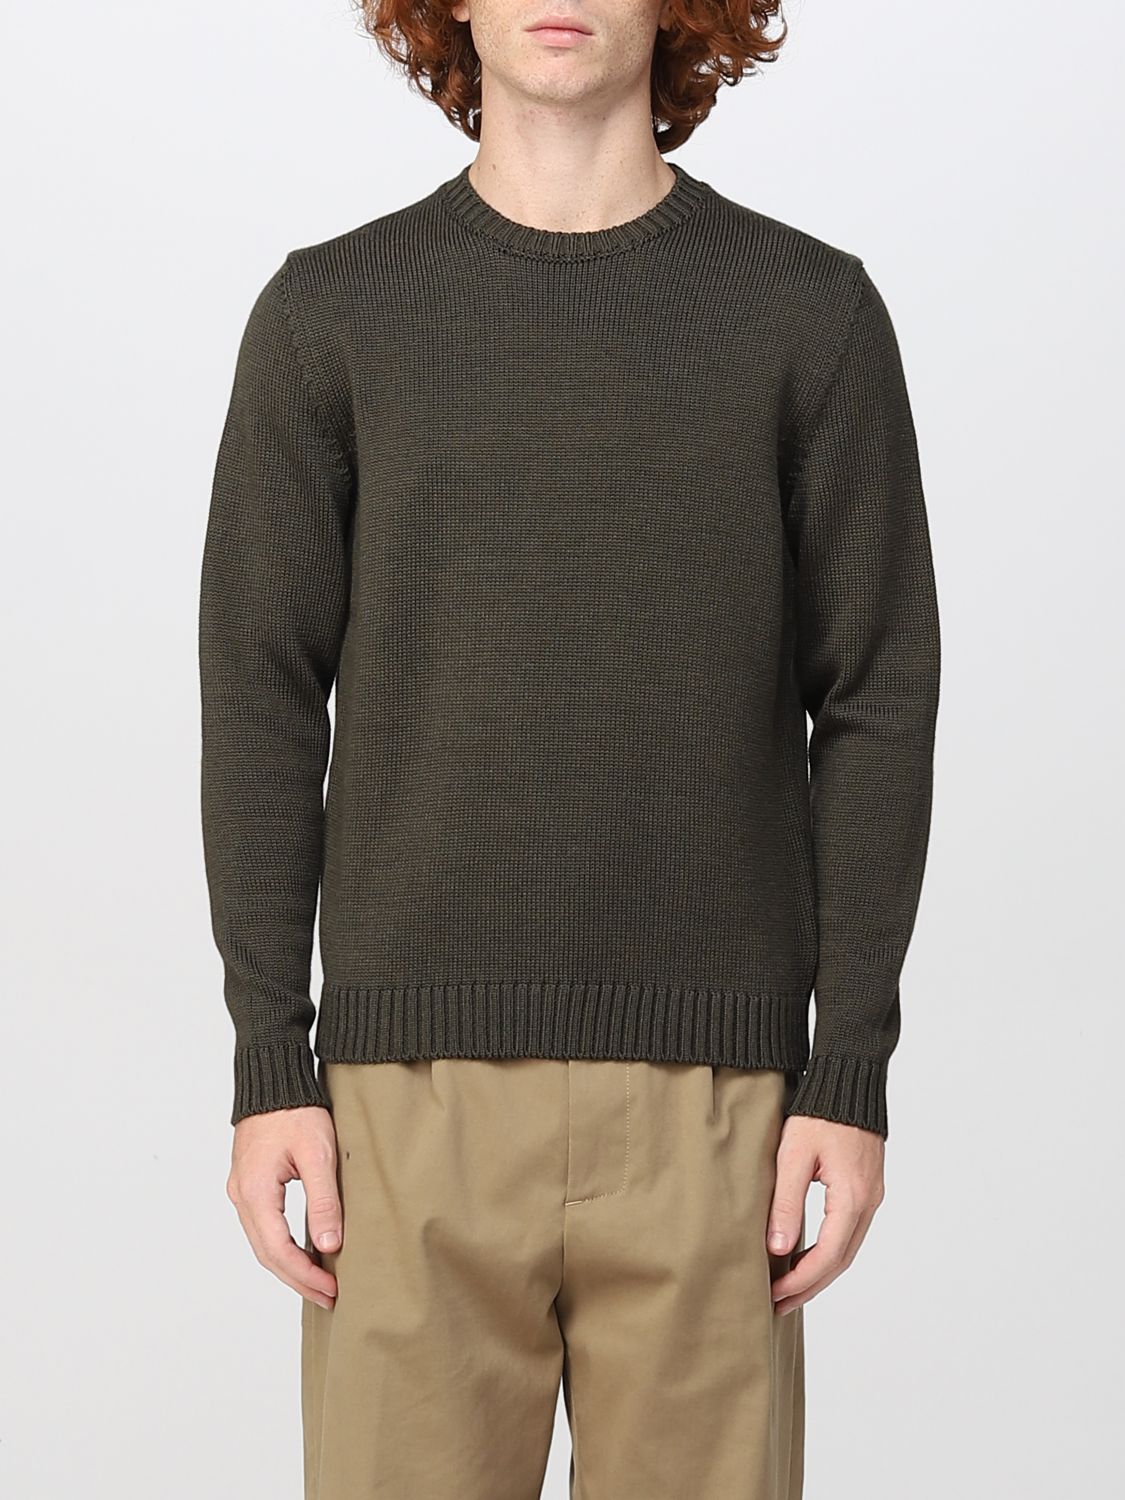 ZANONE: sweater for man - Green | Zanone sweater 812527ZR229 online on ...